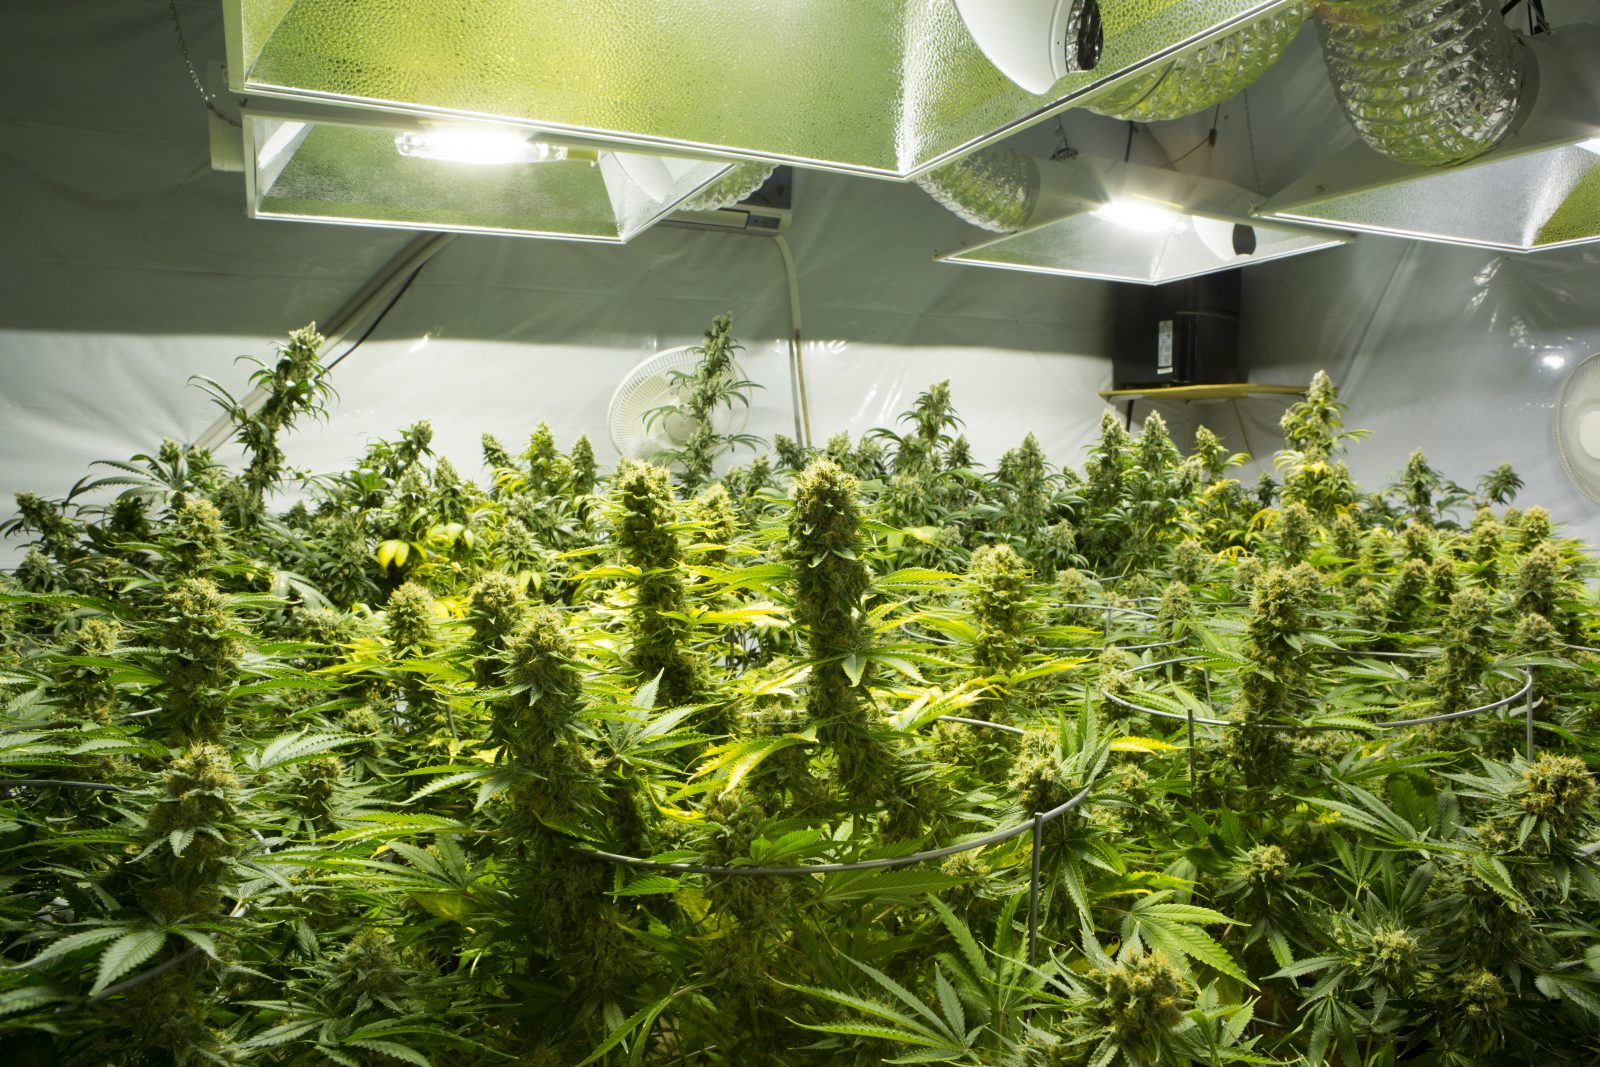 Proposed cannabis facility raises odour concerns